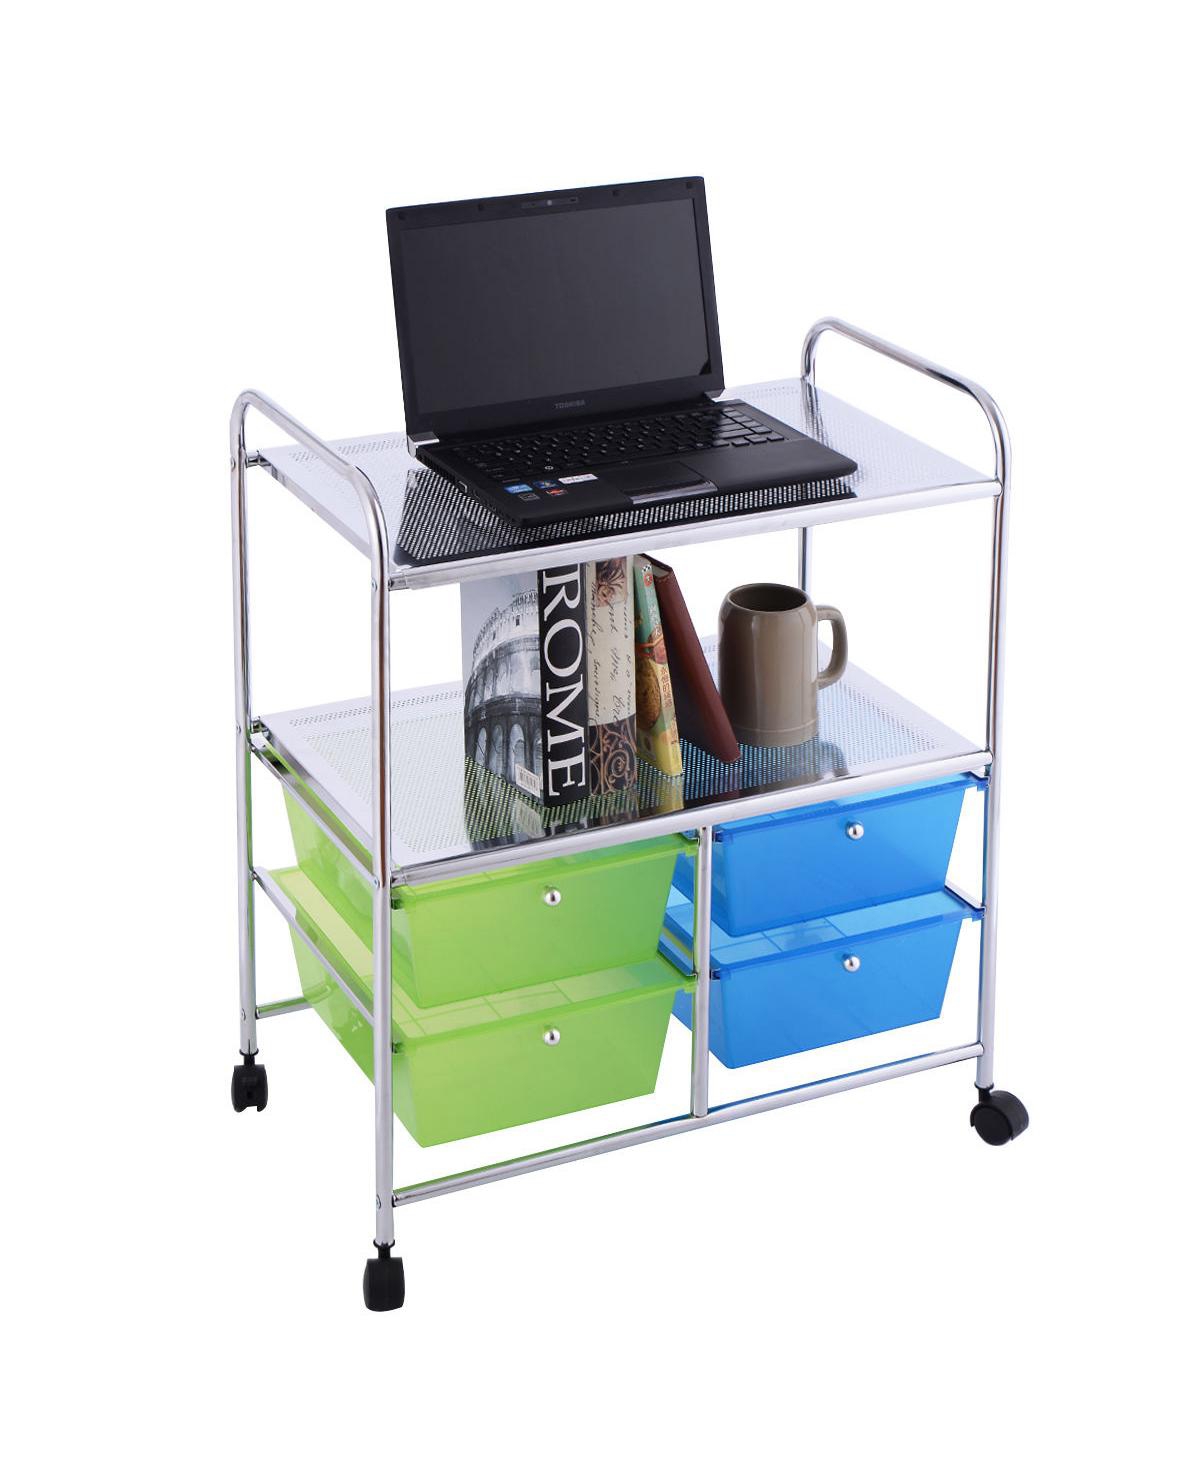 4 Drawers Rolling Storage Cart Metal Rack Shelf Home Office Furniture 2 Shelves - Silver